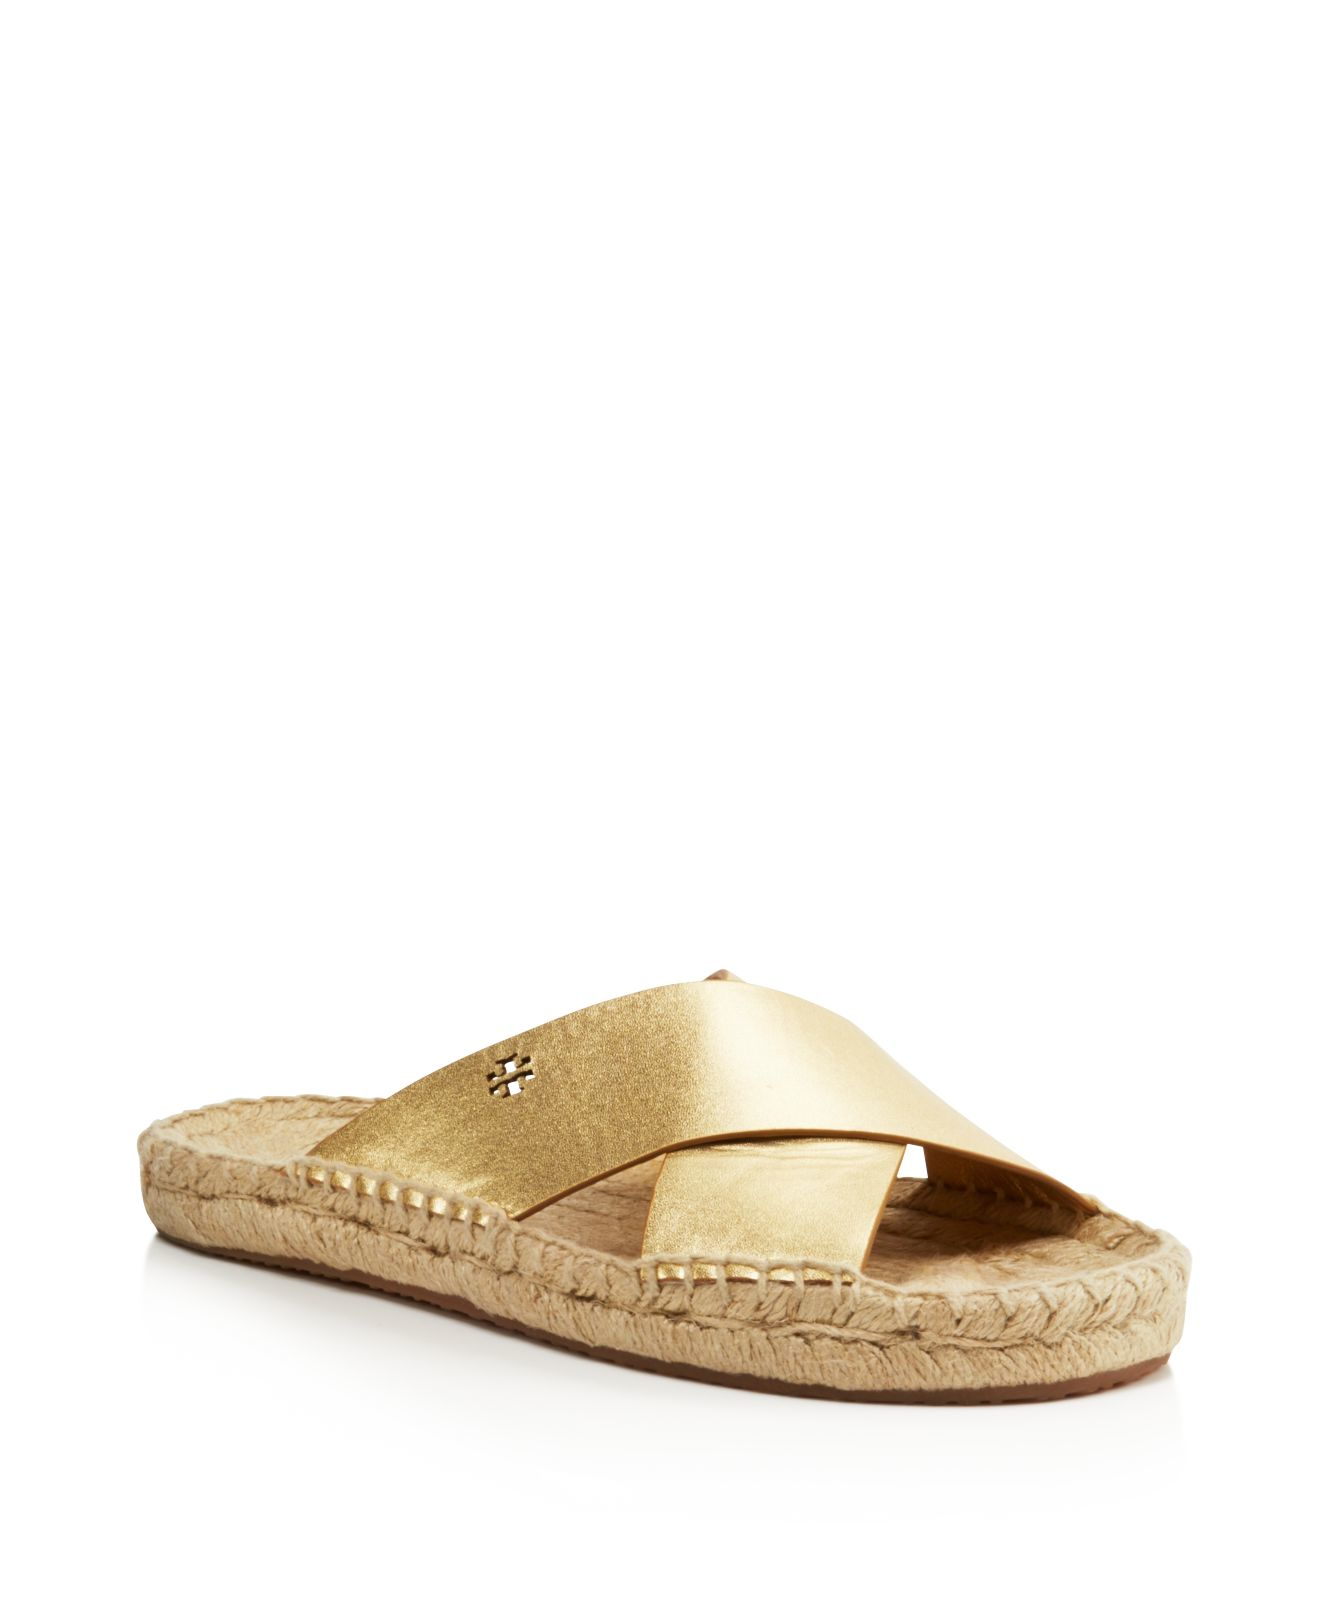 Tory burch Bima Metallic Espadrille Slide Sandals in Gold - Save 40% | Lyst